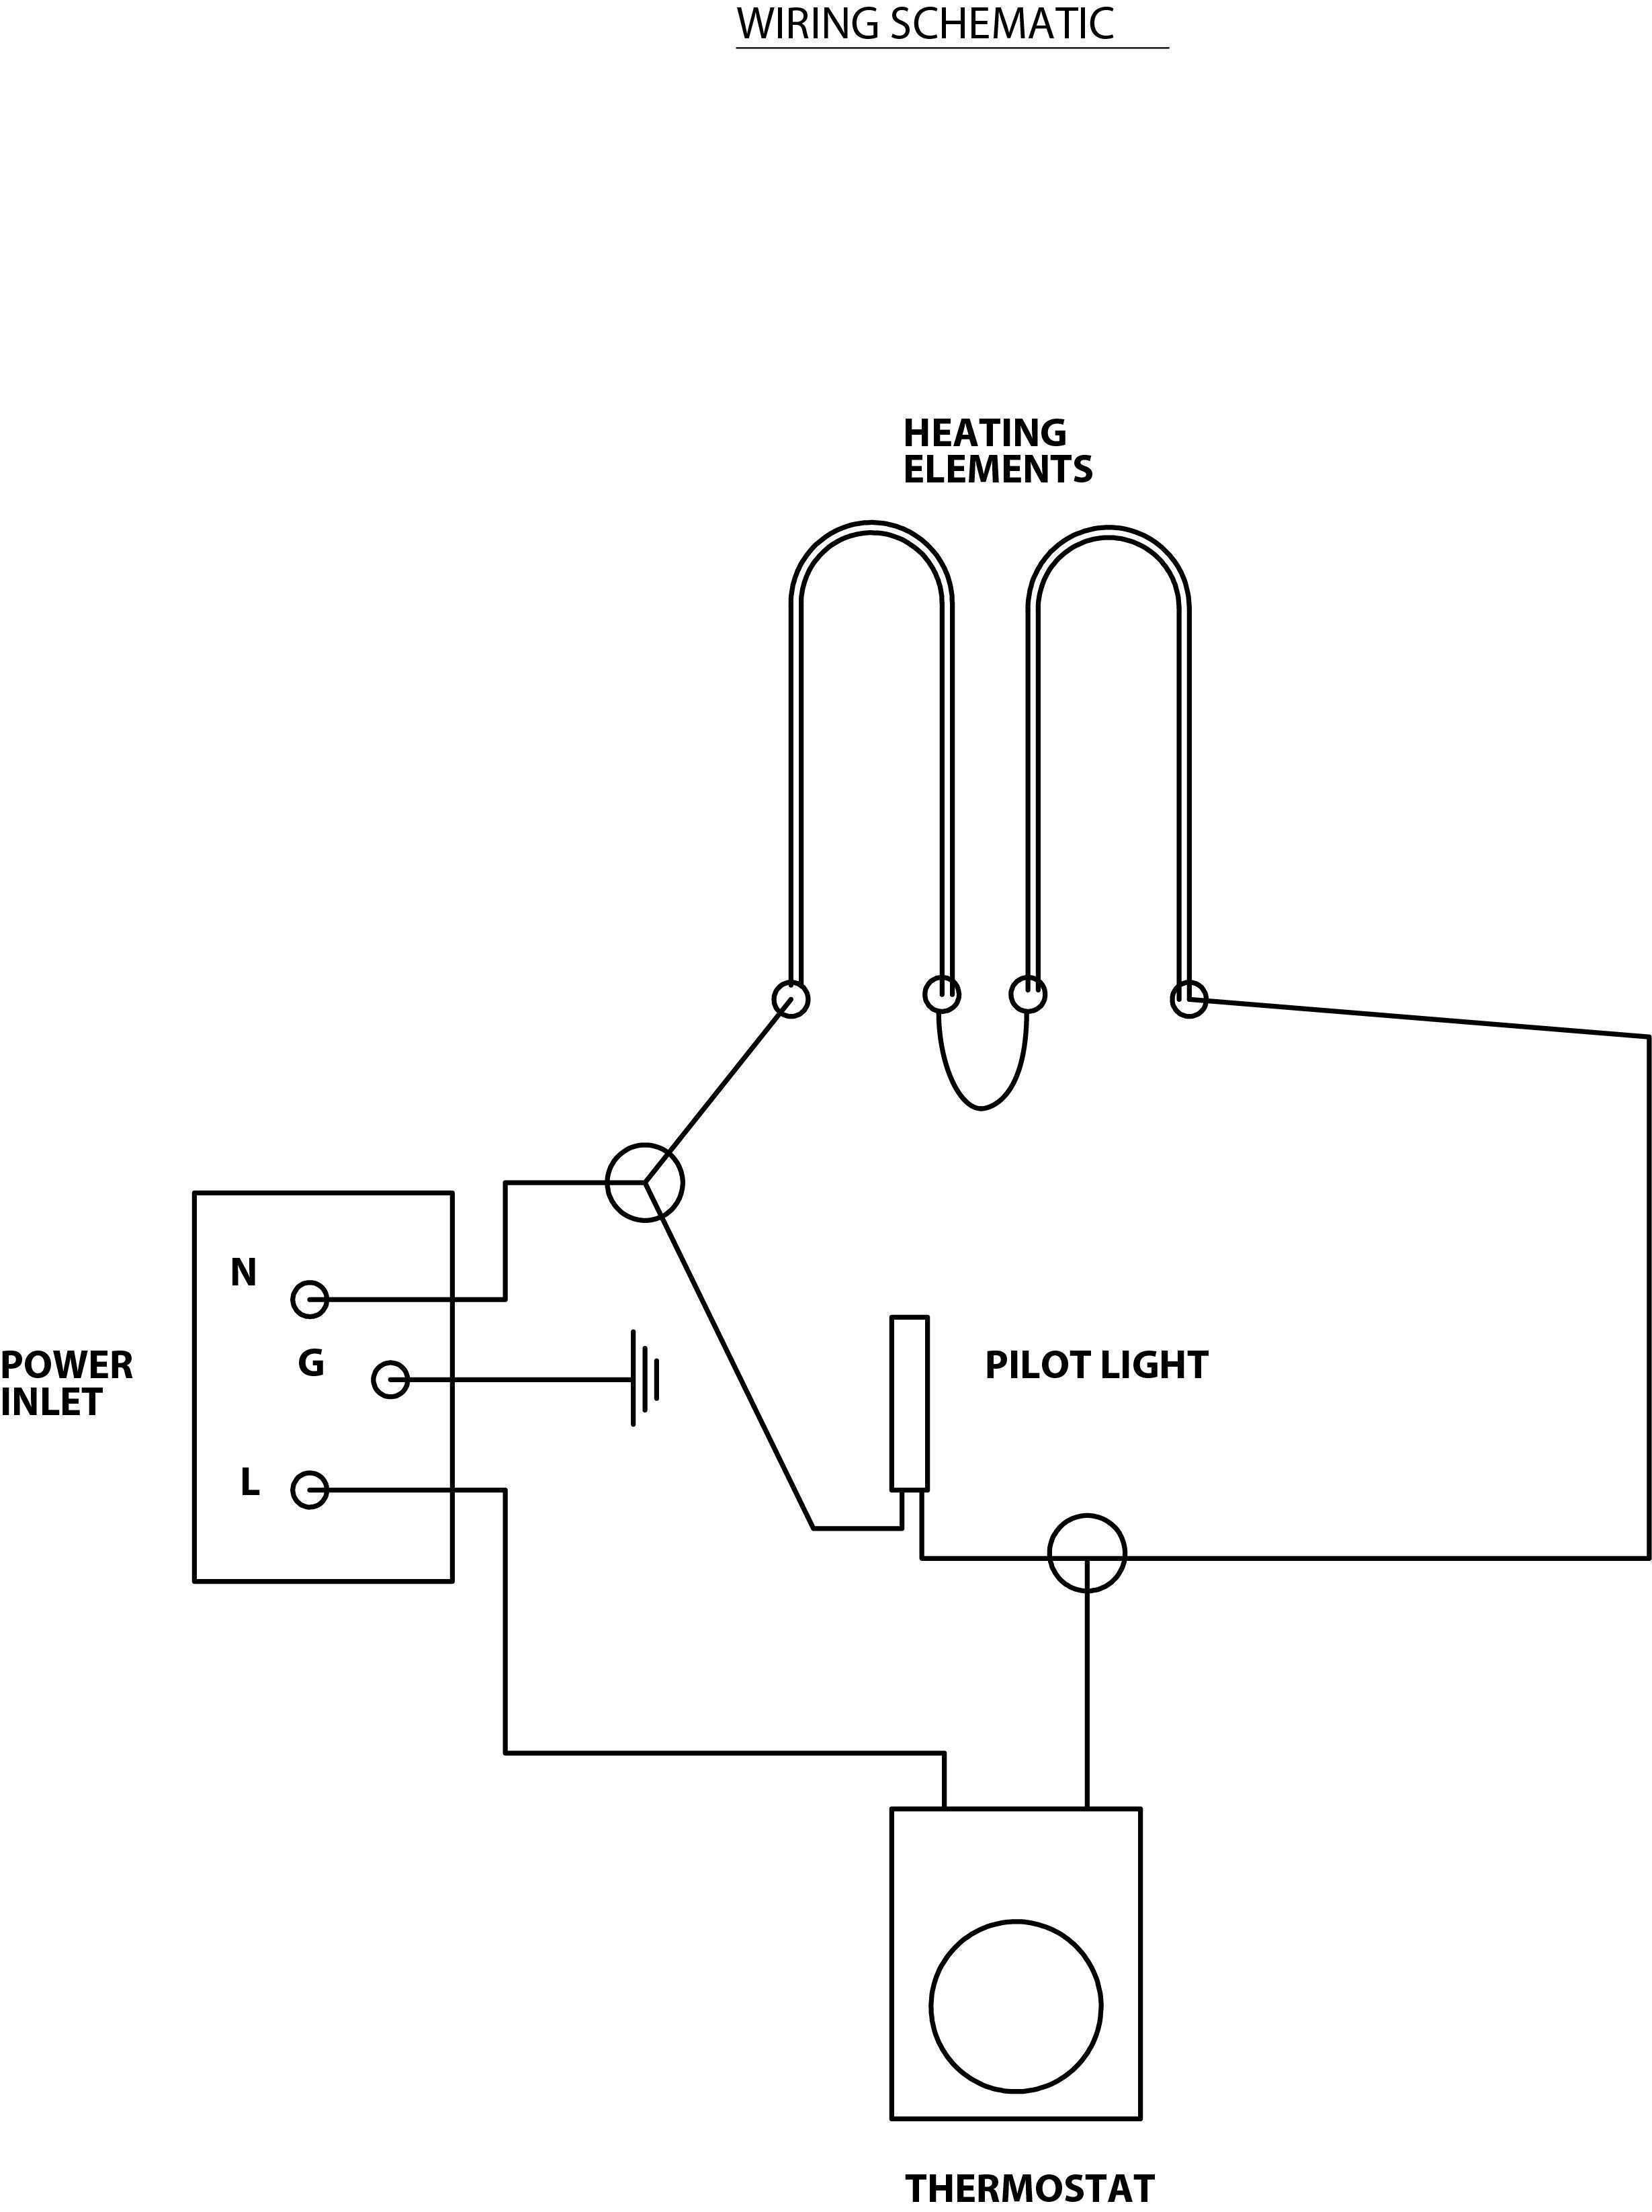 Leeson 3 Phase Motor Wiring Diagram Terminals P | Wiring Diagram - Leeson Motor Wiring Diagram